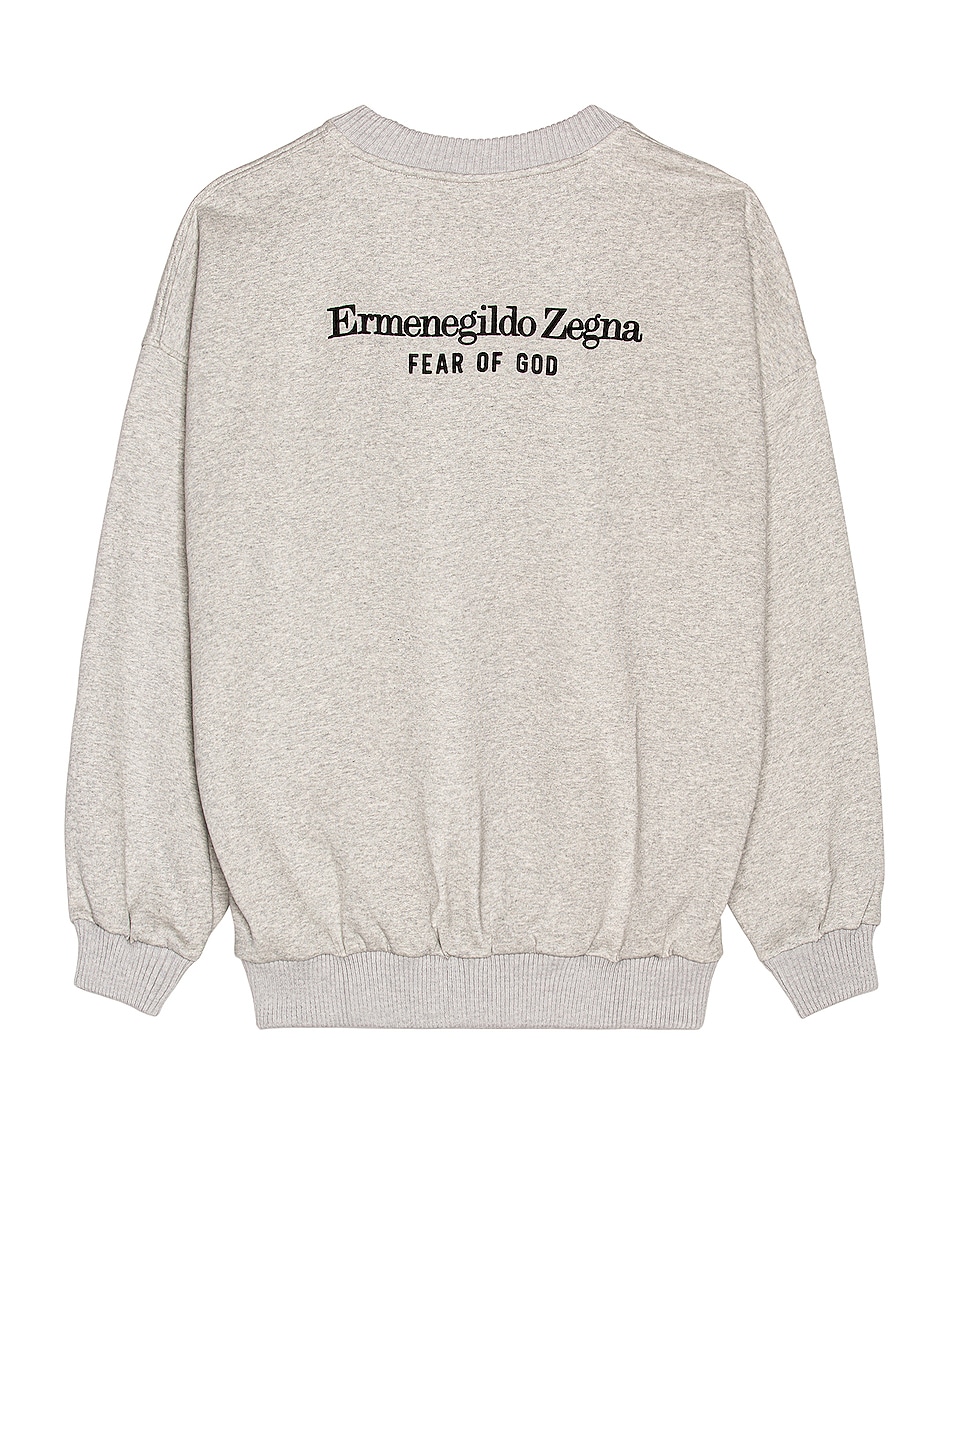 Image 1 of Fear of God Exclusively for Ermenegildo Zegna Oversized Sweatshirt in Grey Melange